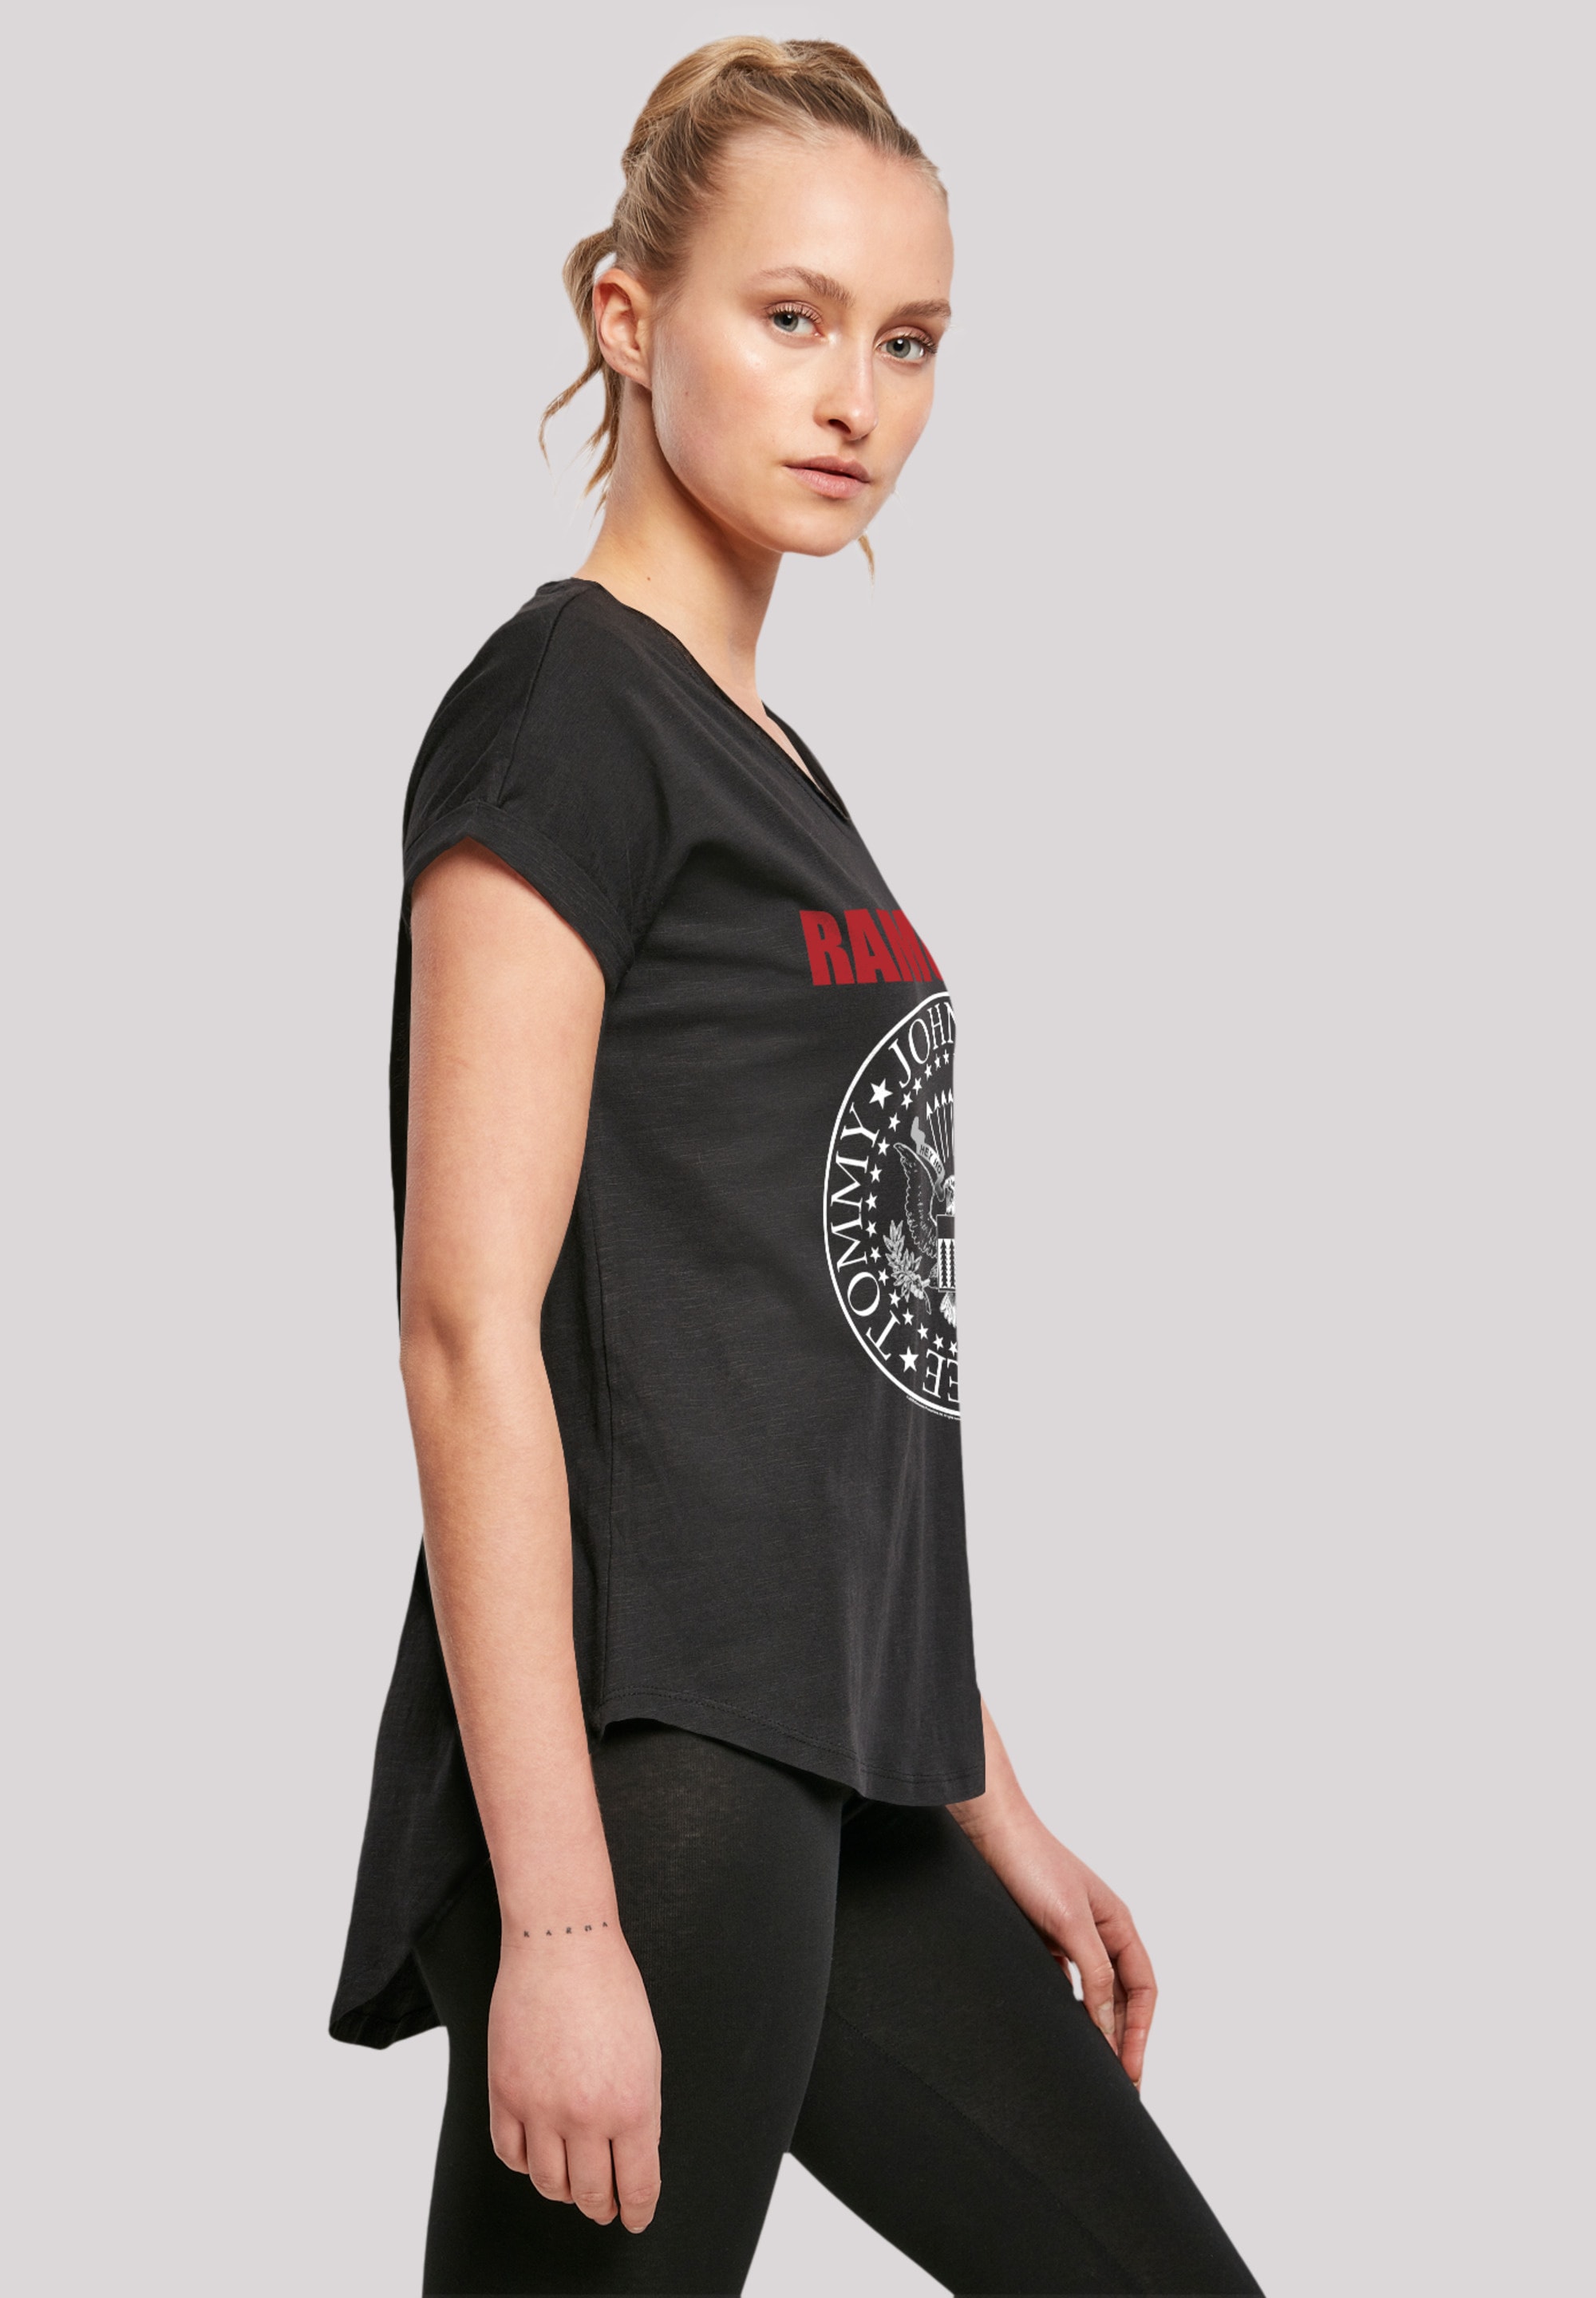 F4NT4STIC T-Shirt »Ramones Rock Musik Band Red Text Seal«, Premium Qualität,  Band, Rock-Musik | I\'m walking | T-Shirts